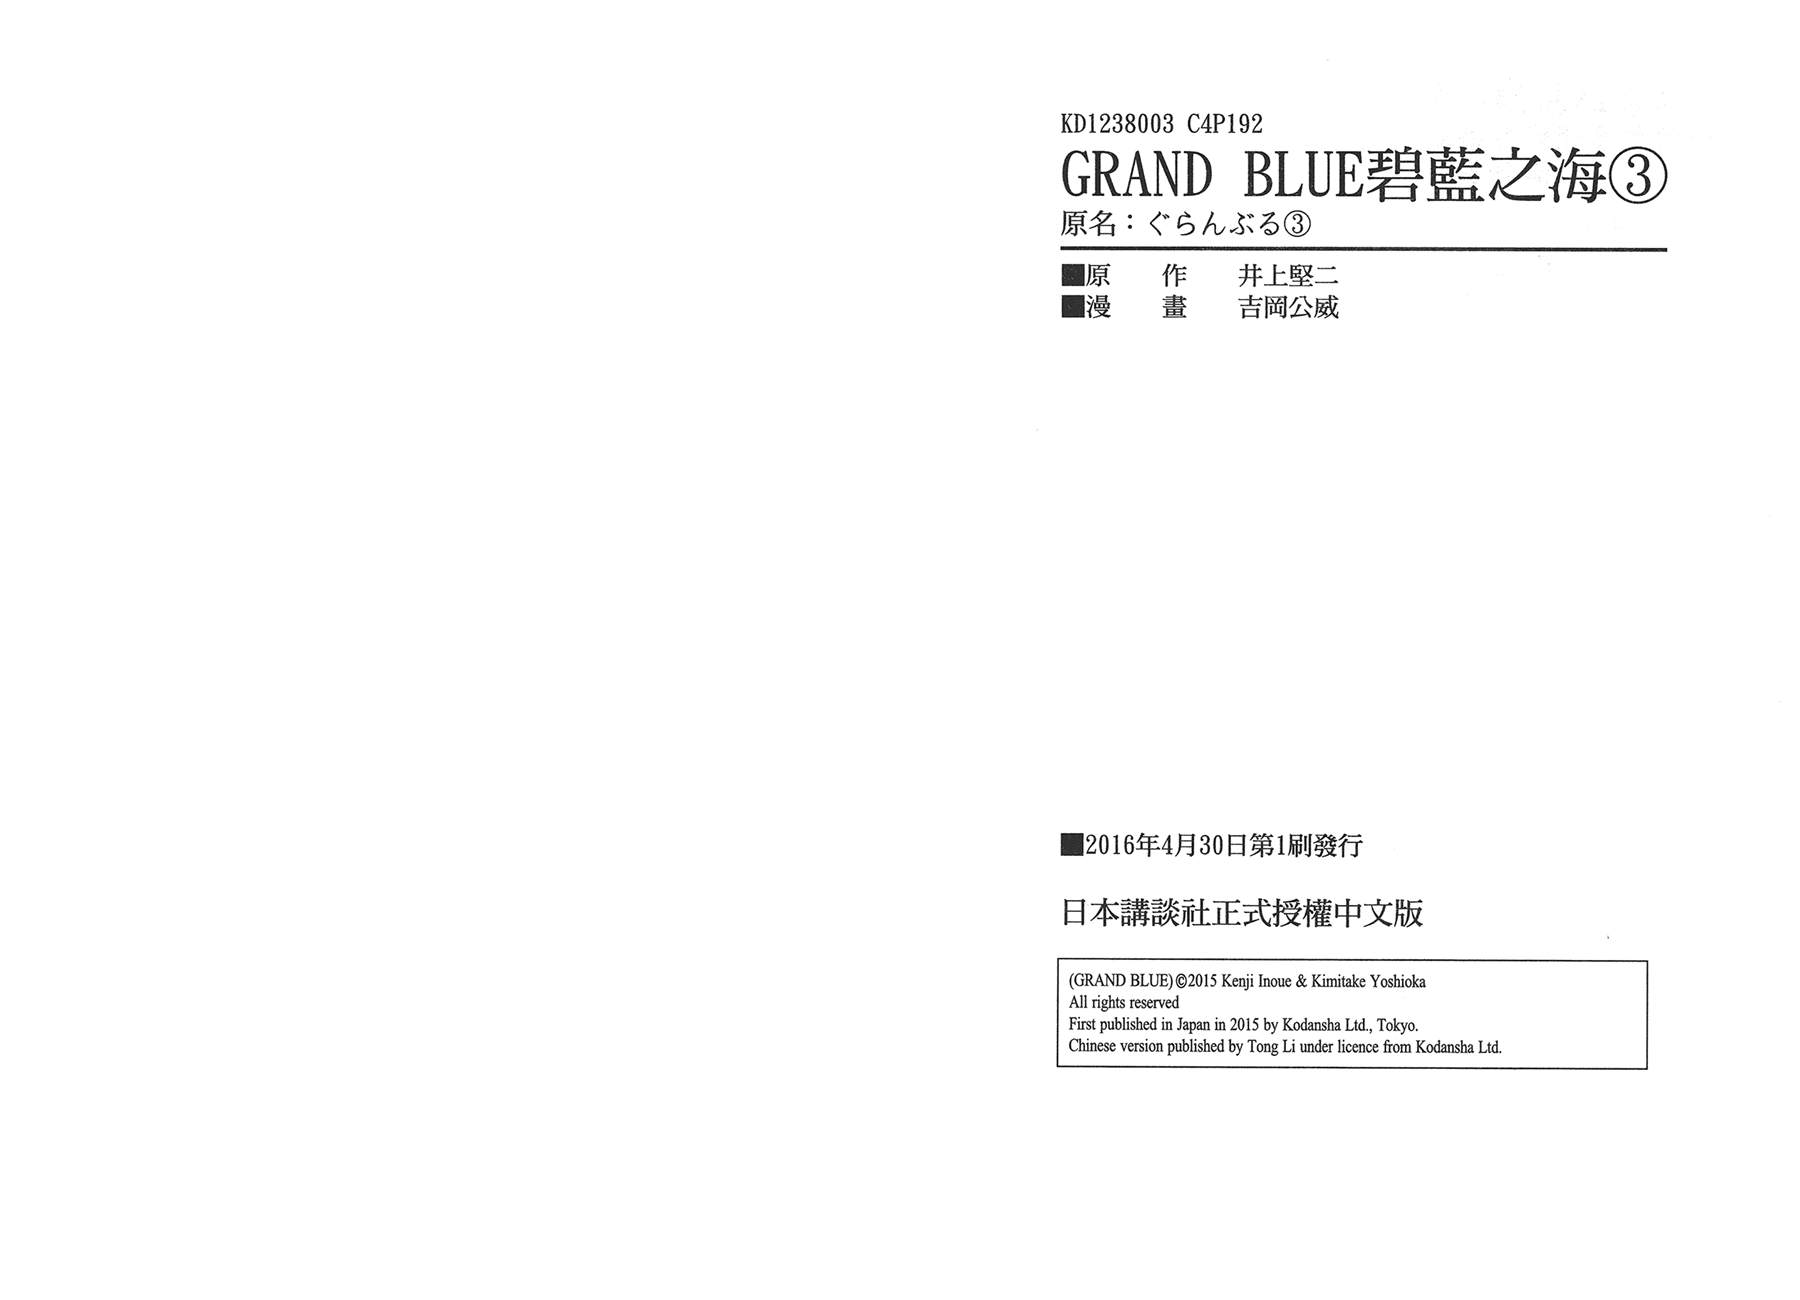 GrandBlue - 第3卷(2/2) - 5